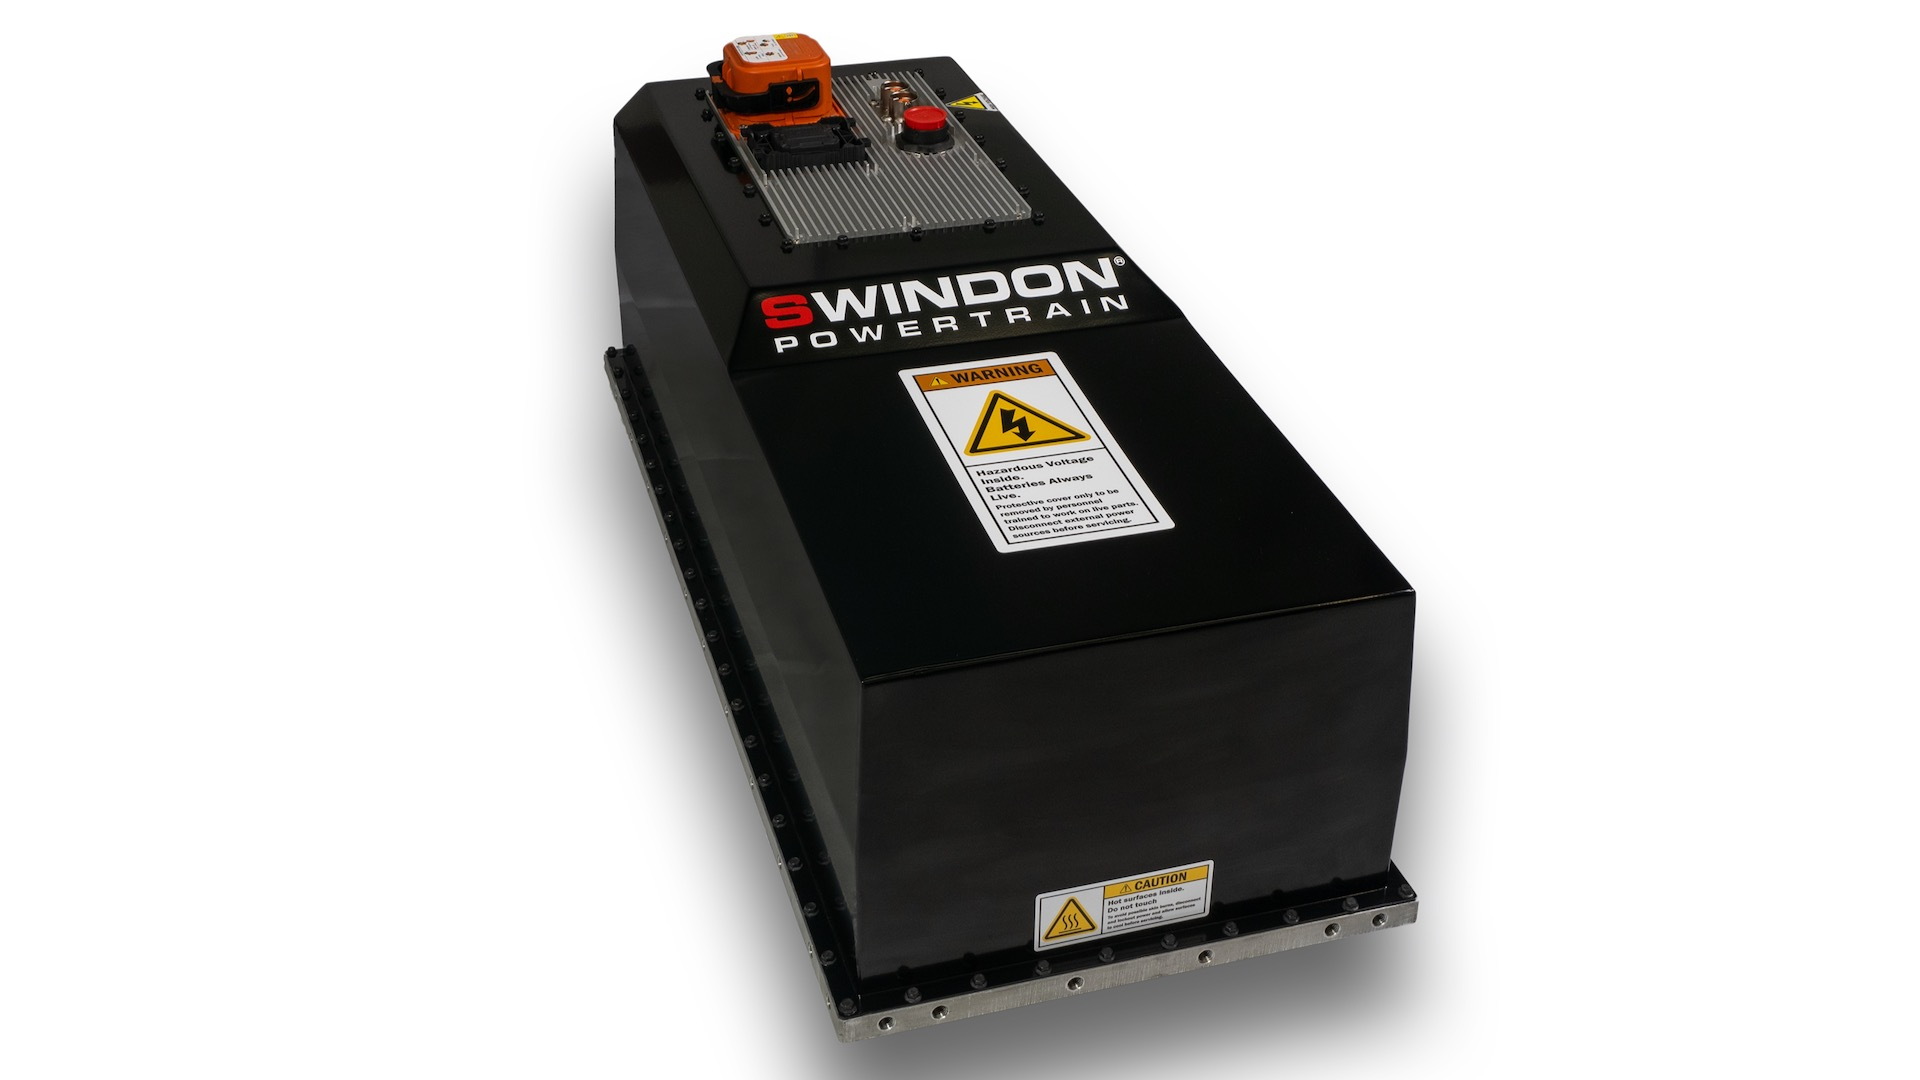 Swindown Powertrain HED 30-kwh battery pack